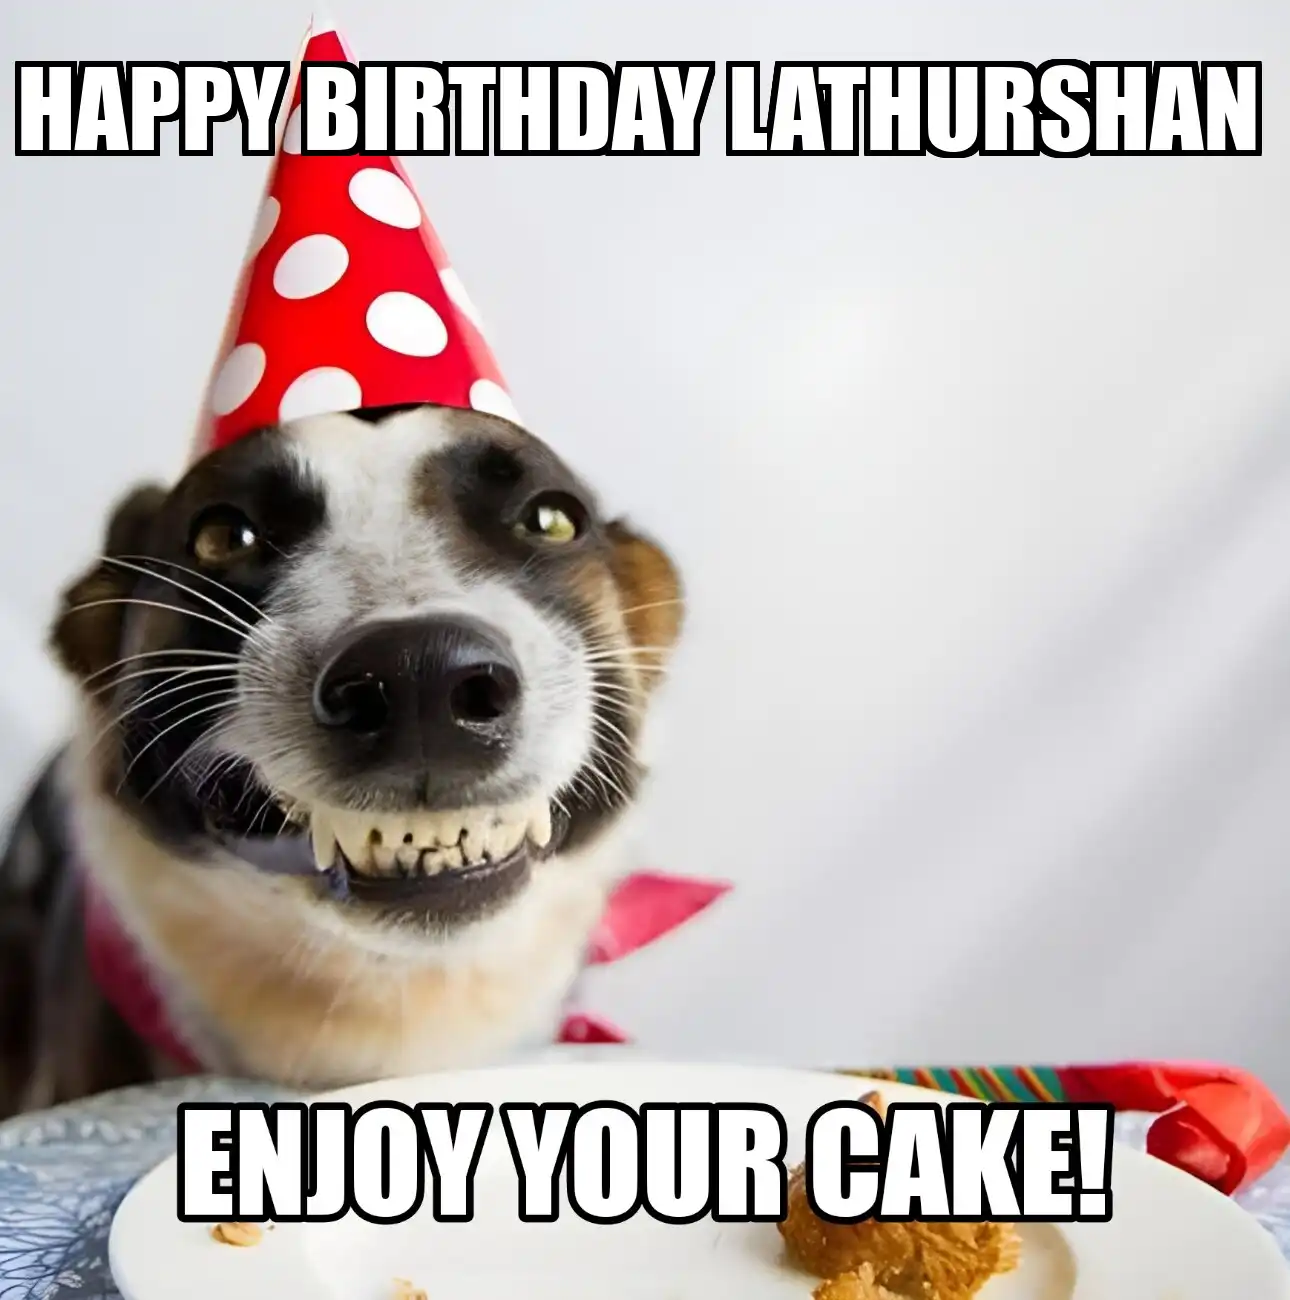 Happy Birthday Lathurshan Enjoy Your Cake Dog Meme